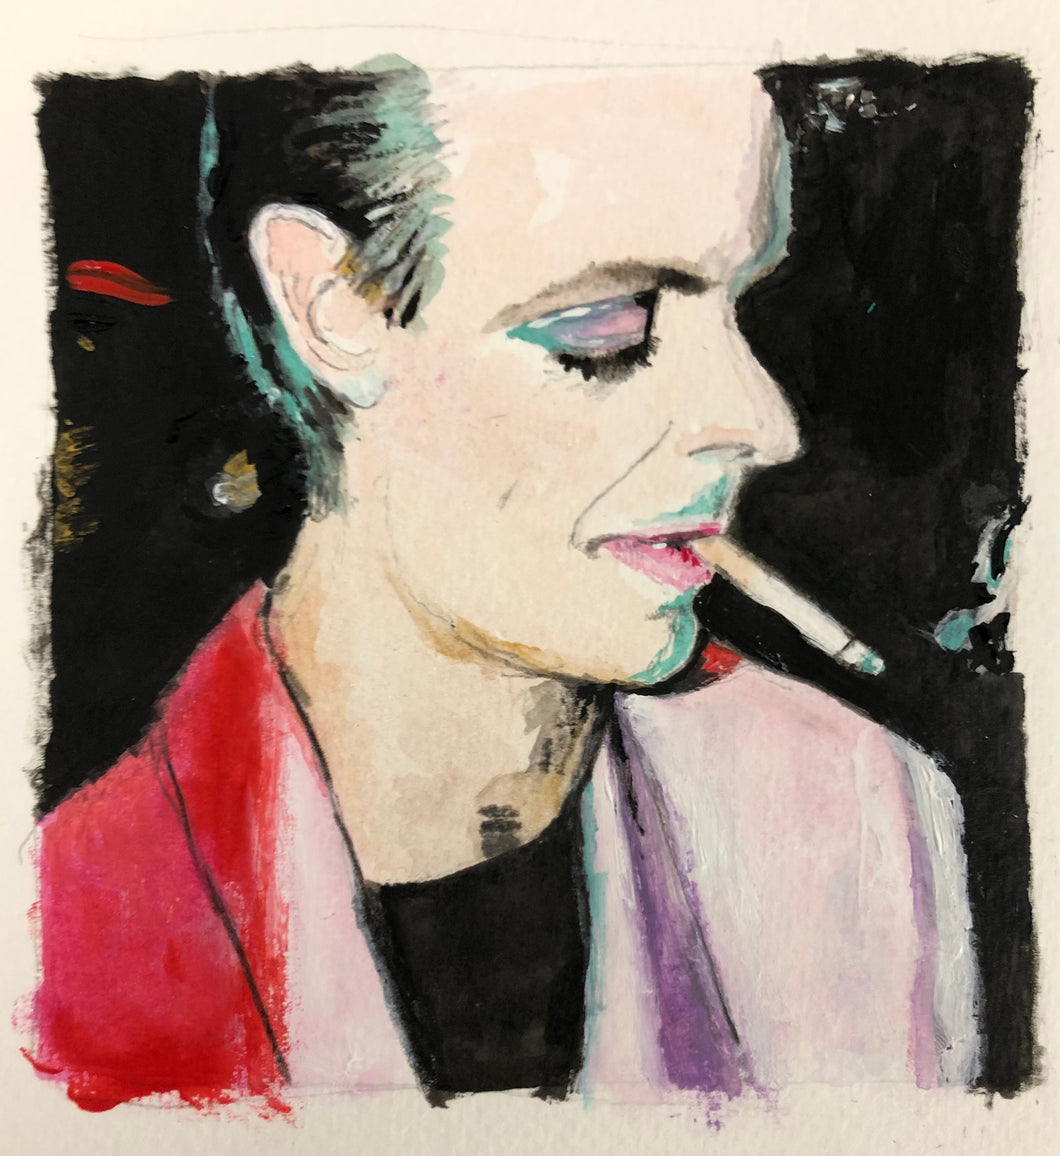 Painting of David Bowie smoking